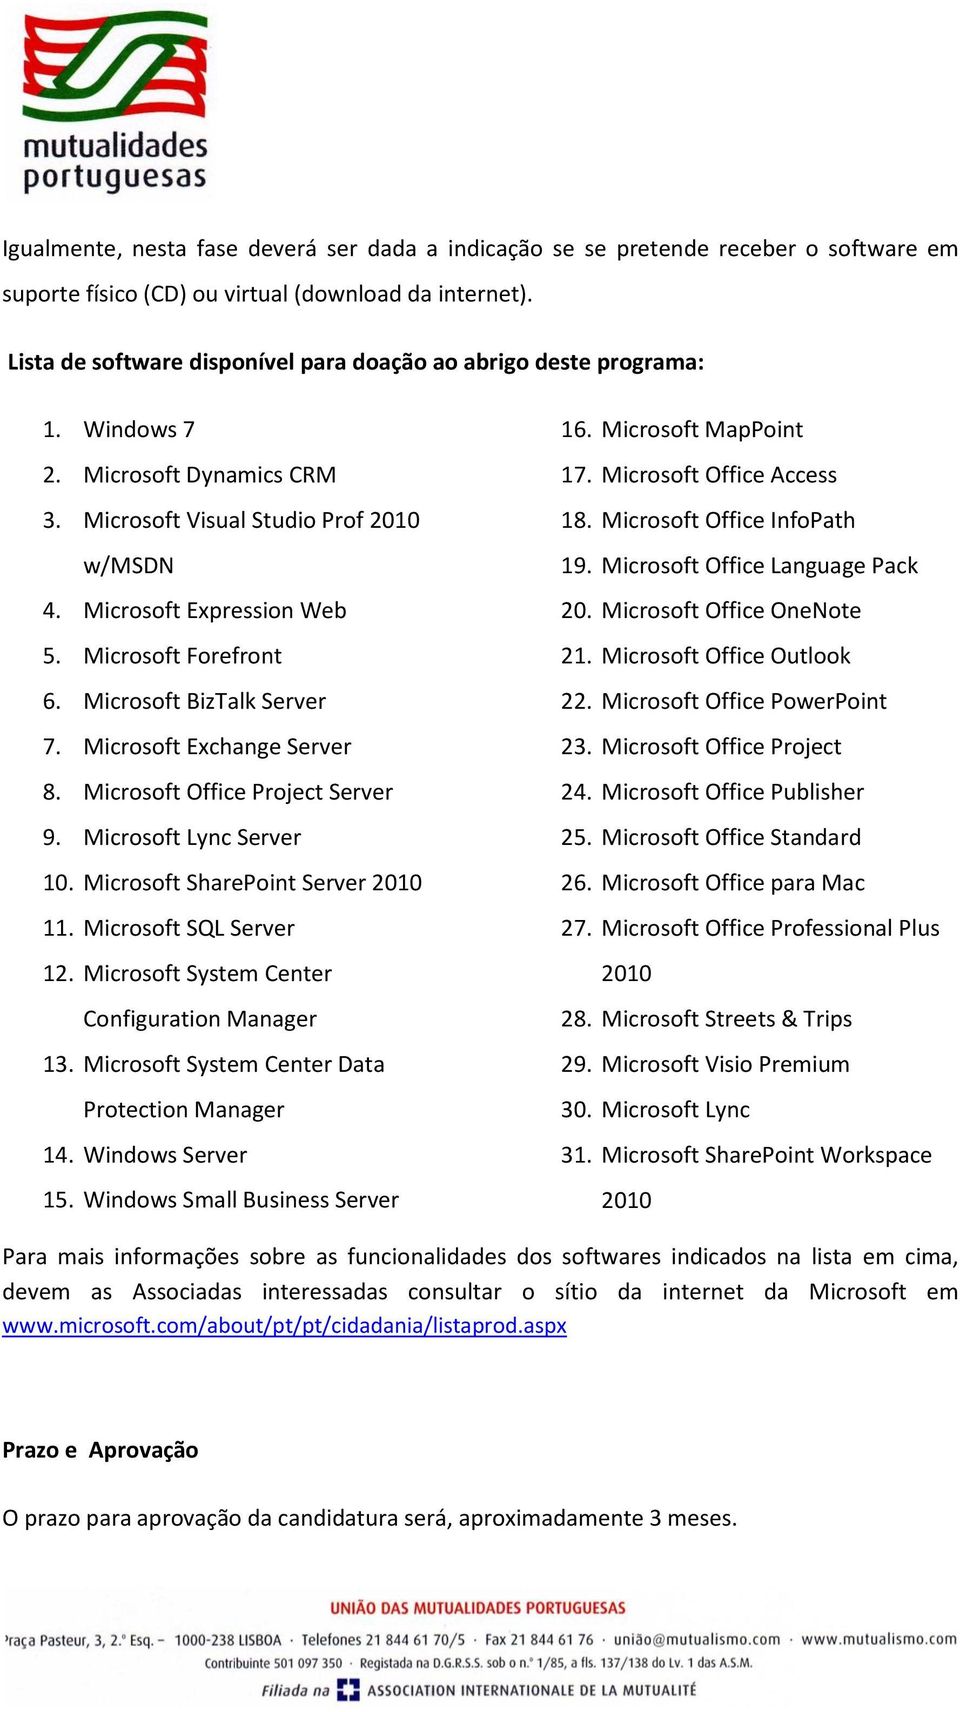 Microsoft Forefront 6. Microsoft BizTalk Server 7. Microsoft Exchange Server 8. Microsoft Office Project Server 9. Microsoft Lync Server 10. Microsoft SharePoint Server 2010 11.